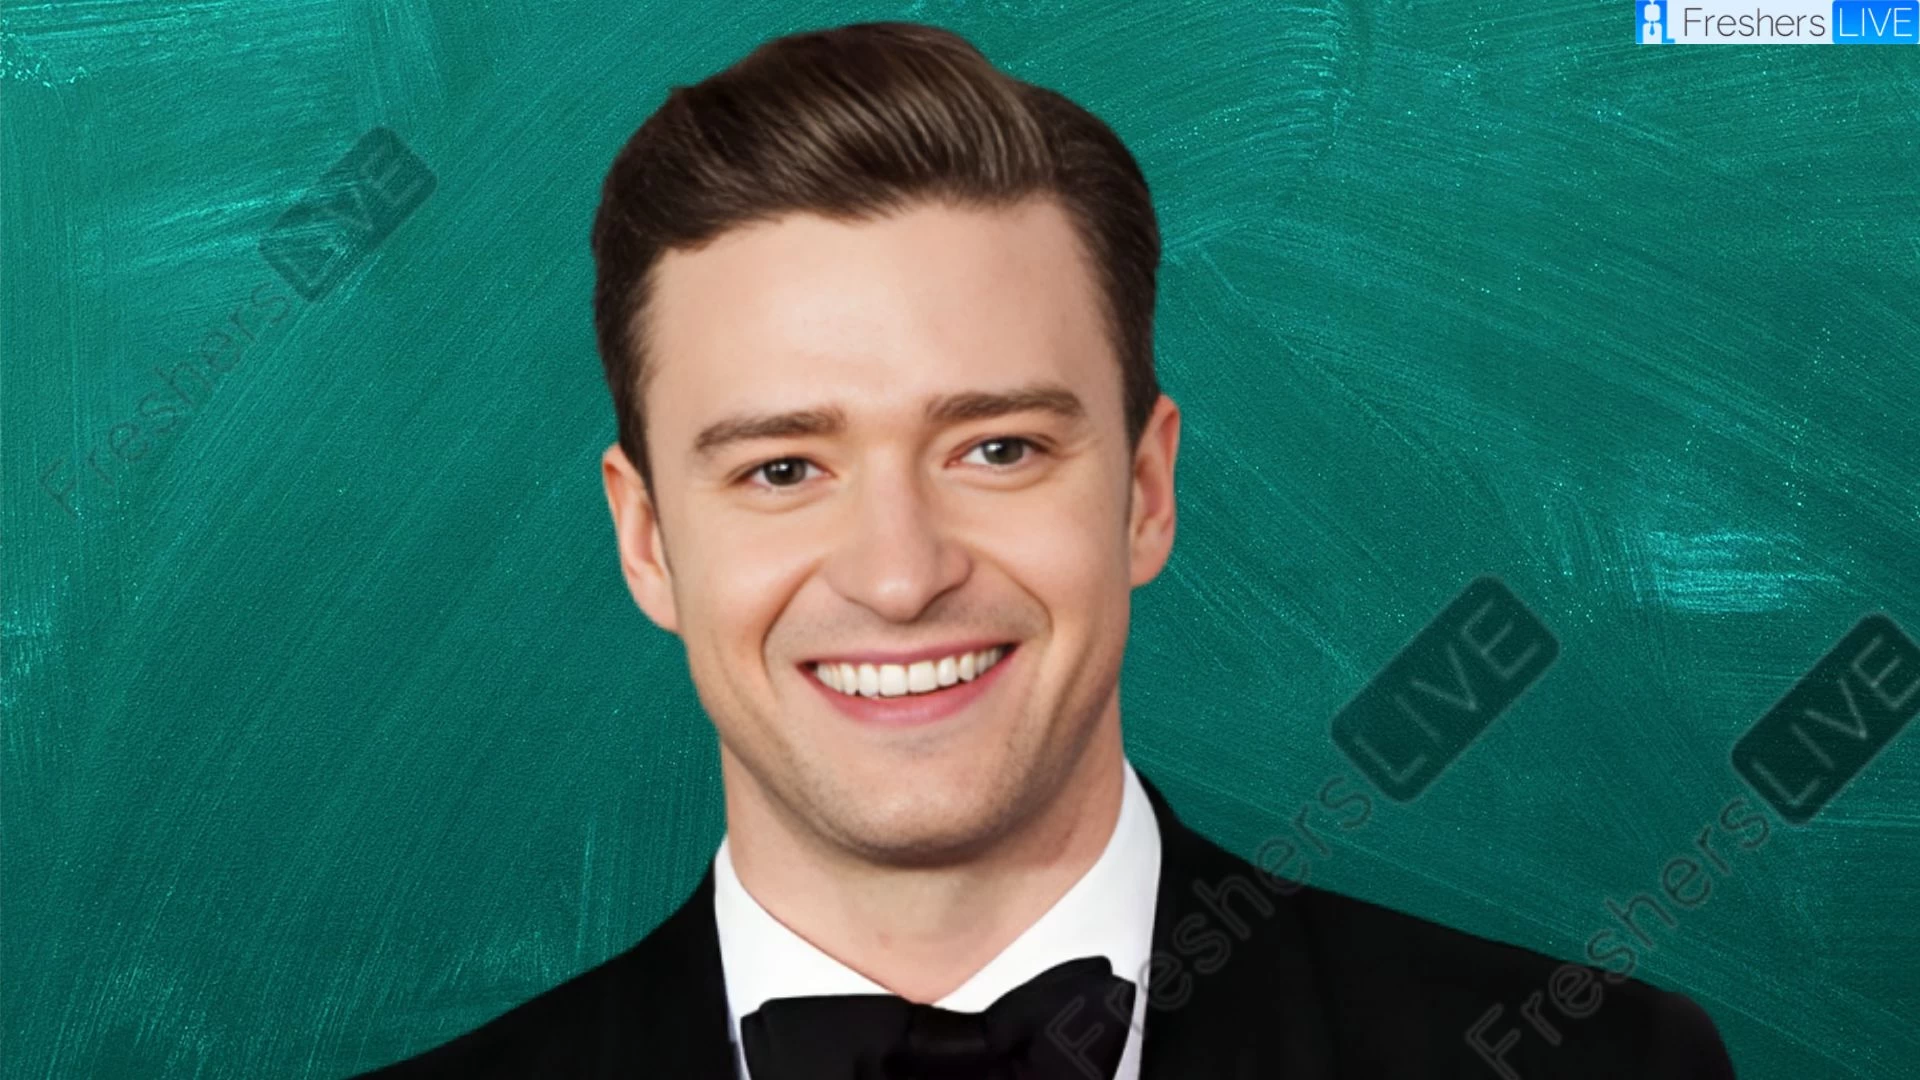 Justin Timberlake Ethnicity, What is Justin Timberlake's Ethnicity?